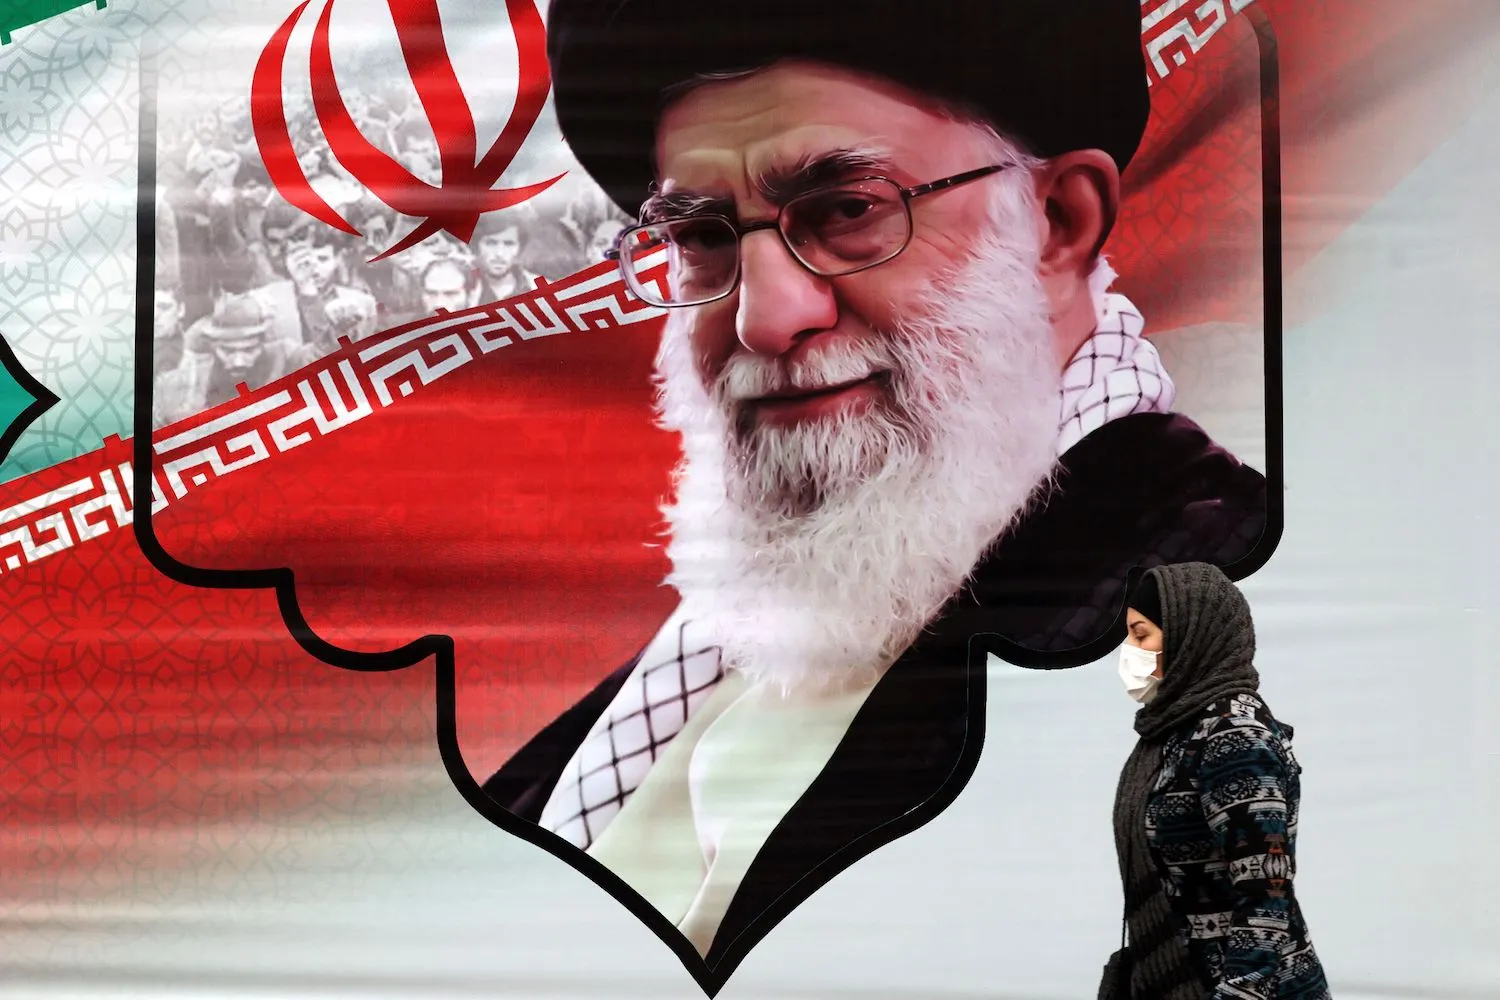 Iran Supreme leader Ayatollah Ali Khamenei